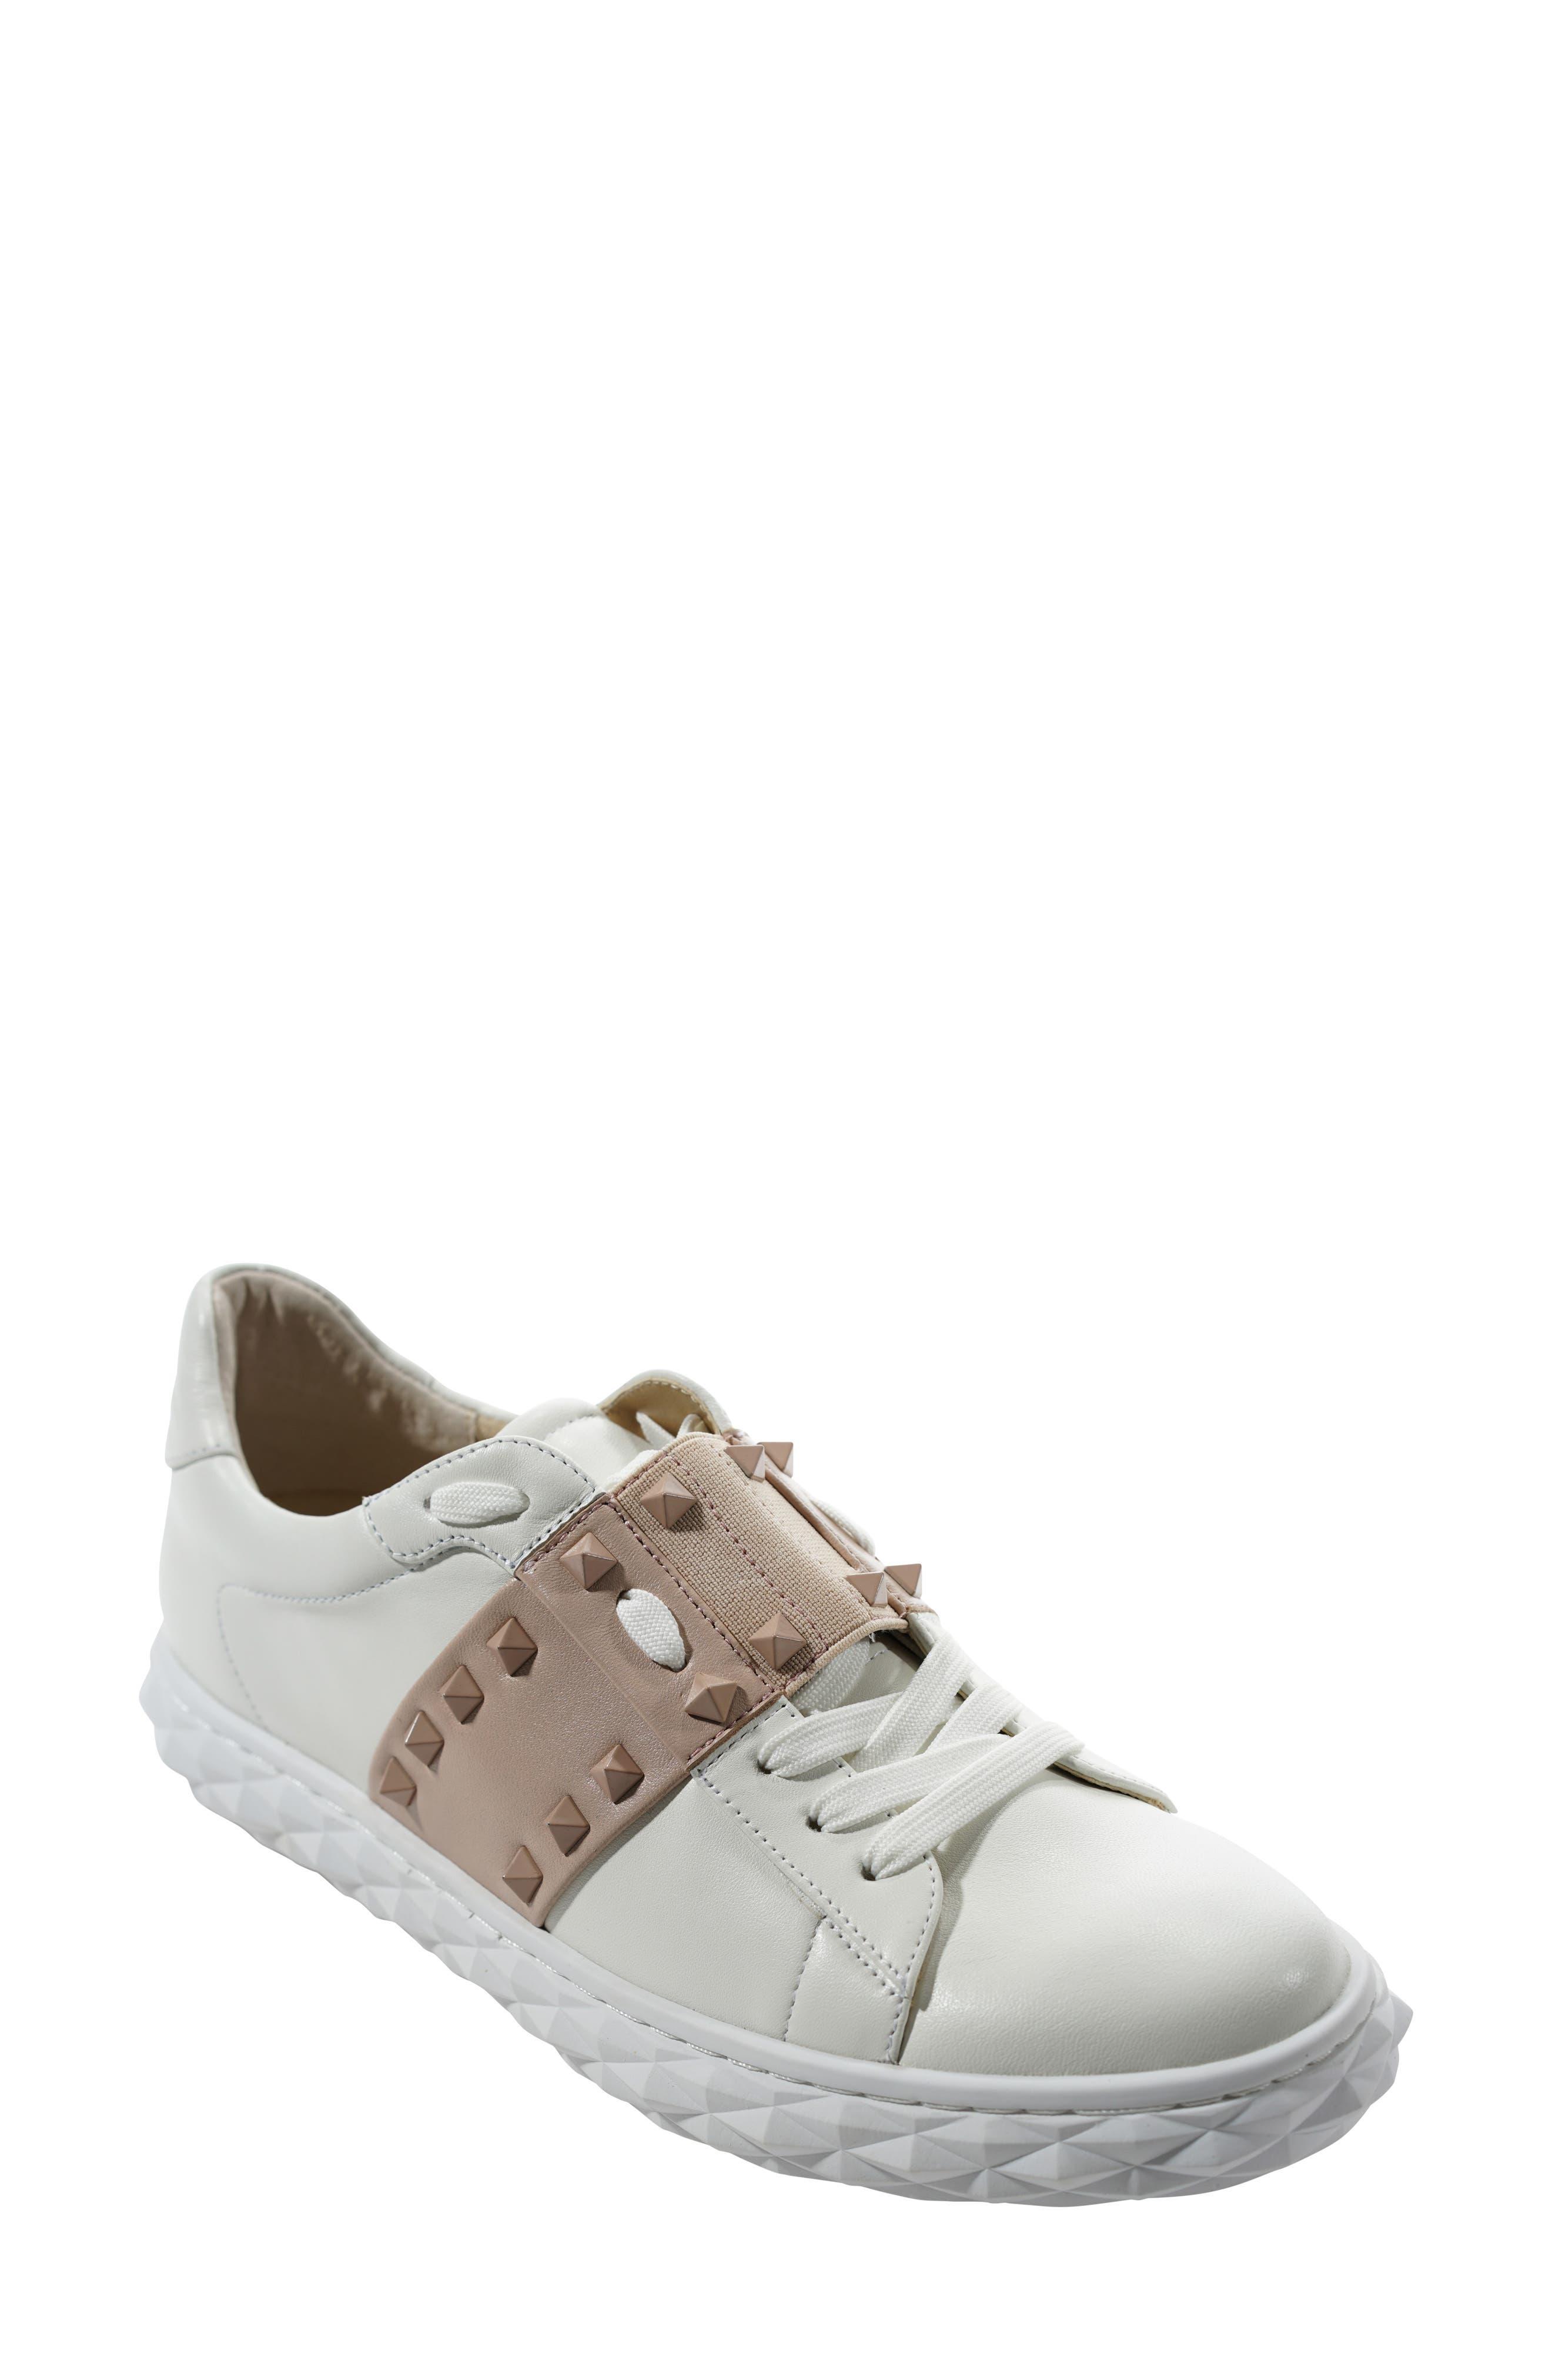 Vaneli Odile Studded Sneaker In White Nappa/blush At Nordstrom Rack | Lyst